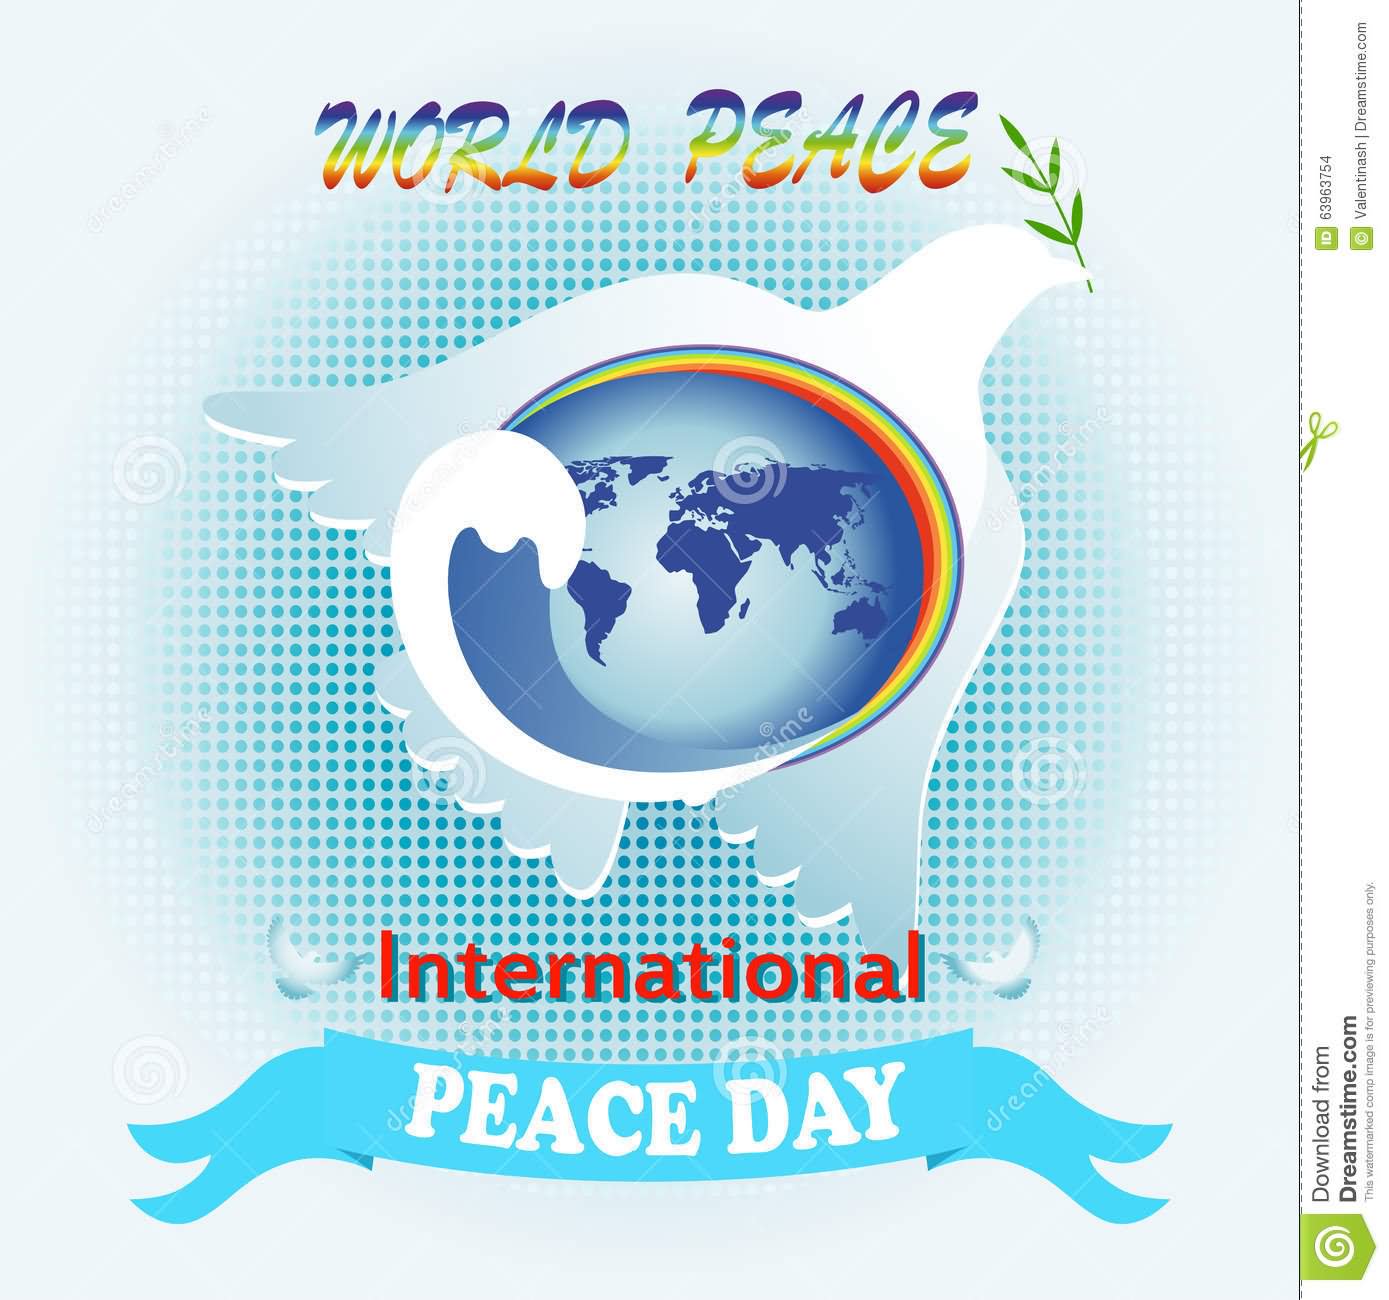 World Peace International Peace Day Poster